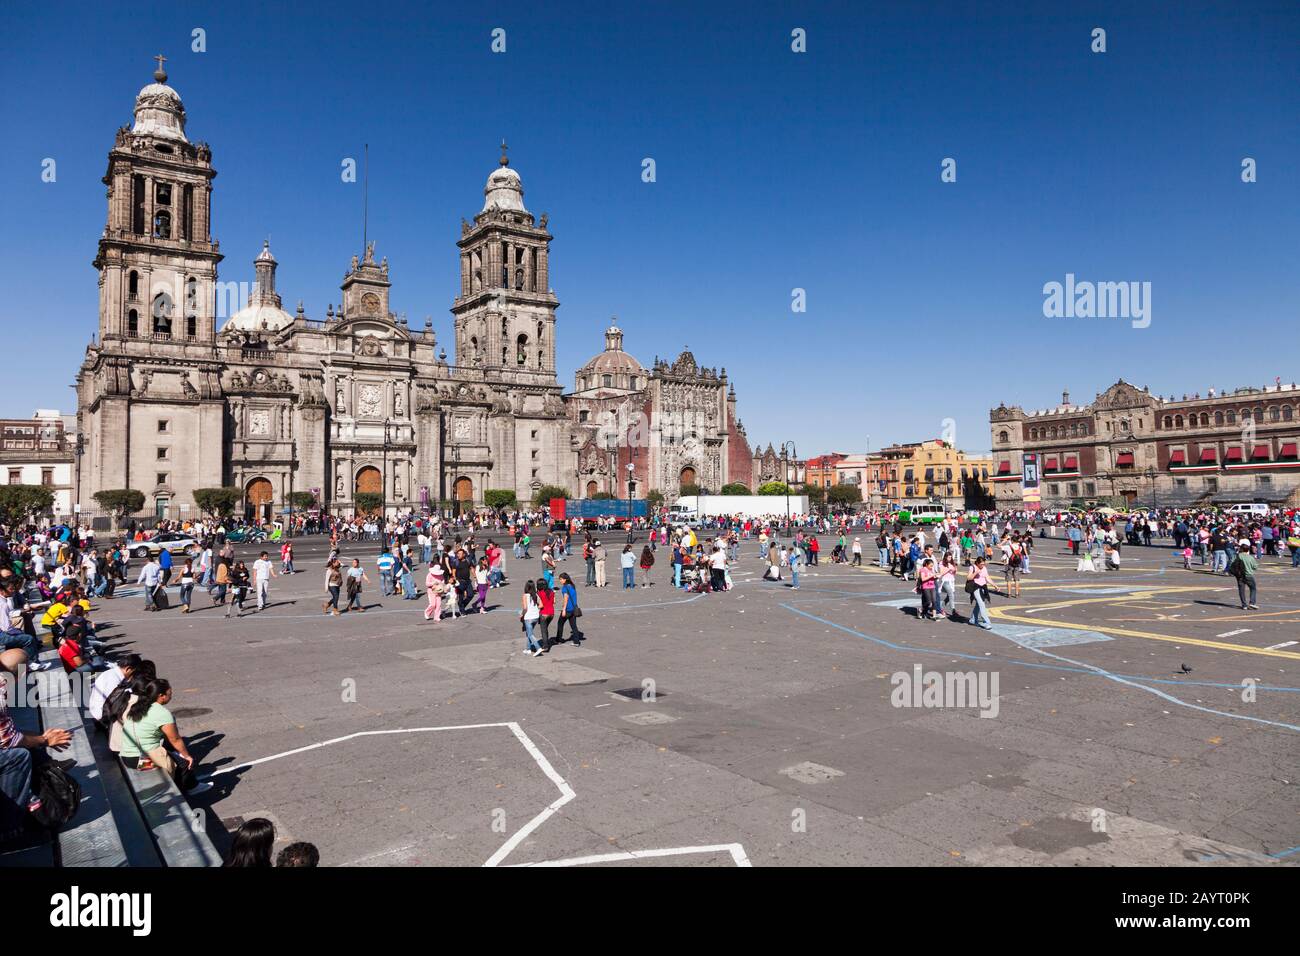 Catedral Metropolitana De Ciudad De México, Zócalo, Plaza De La Constitución, Ciudad De México, México, Centroamérica Foto de stock